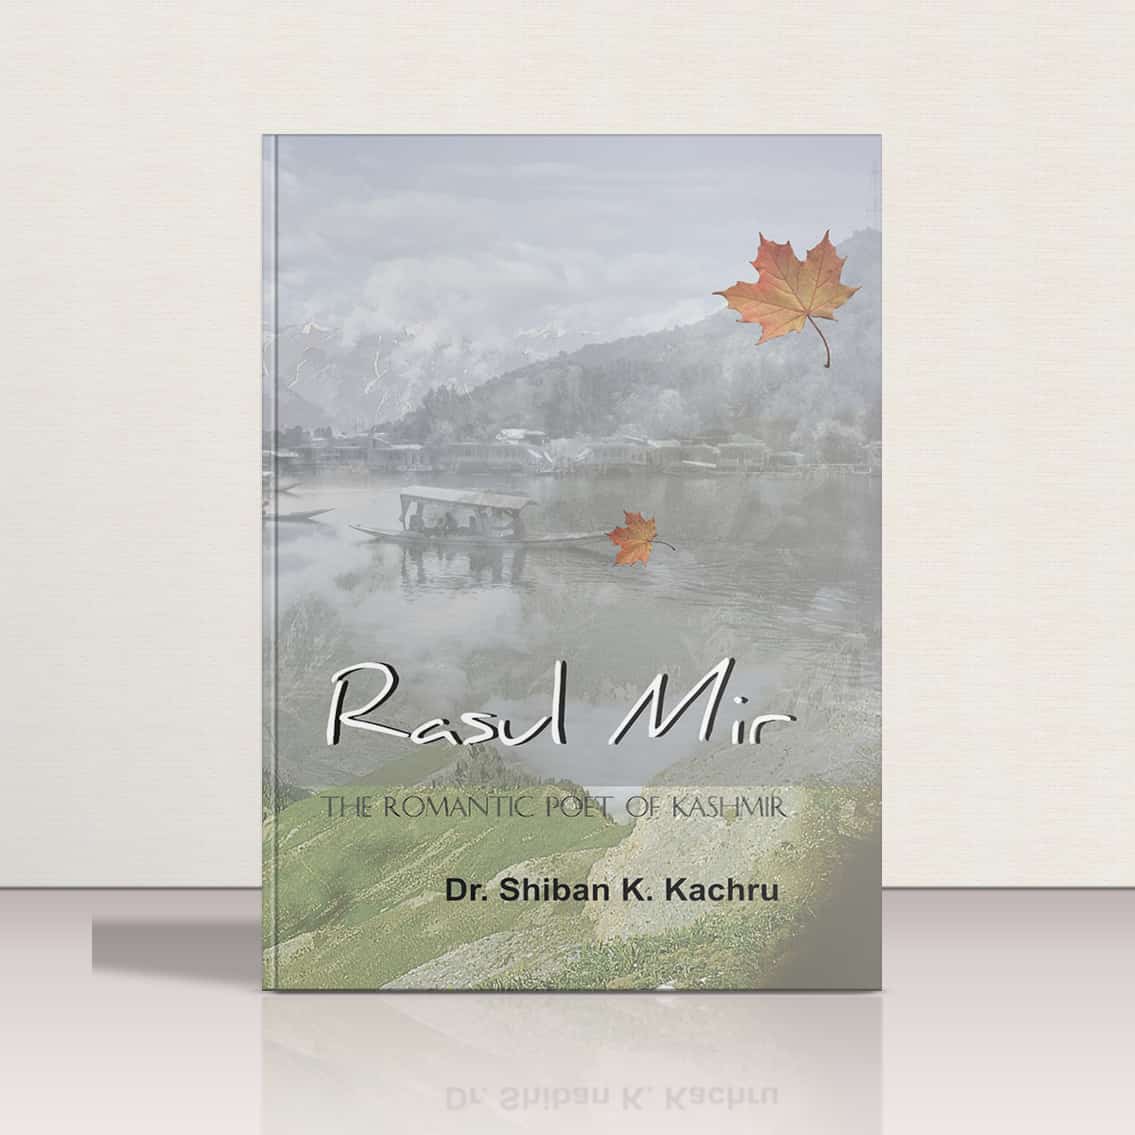 Rasul Mir (The Romantic Poet of Kashmir) by Dr.Shiban Kachru